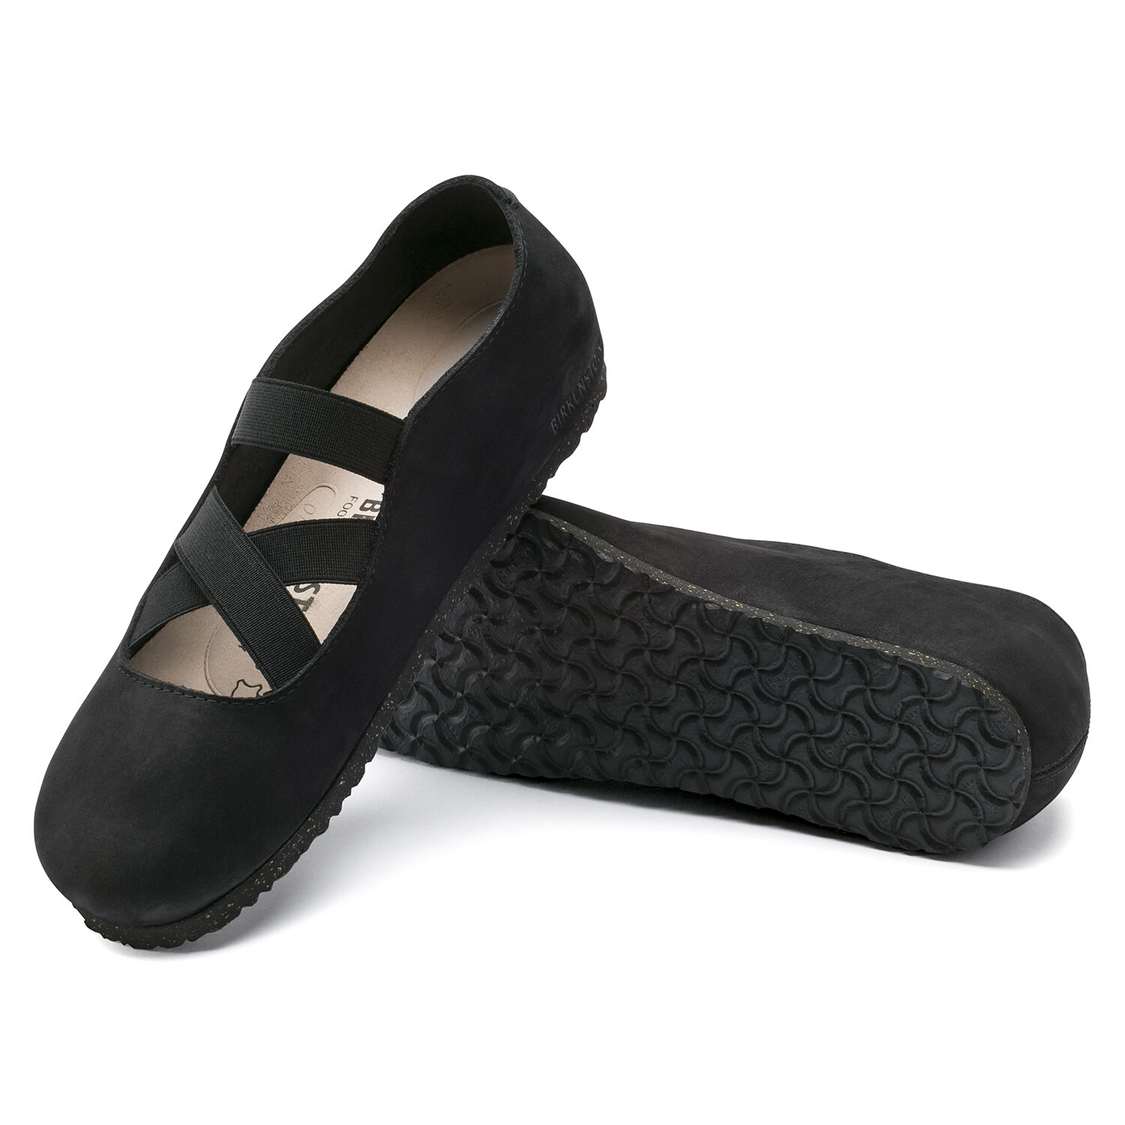 Black Birkenstock Santa Ana Nubuck Leather Women's Low Shoes | 9vLEznMLgLK